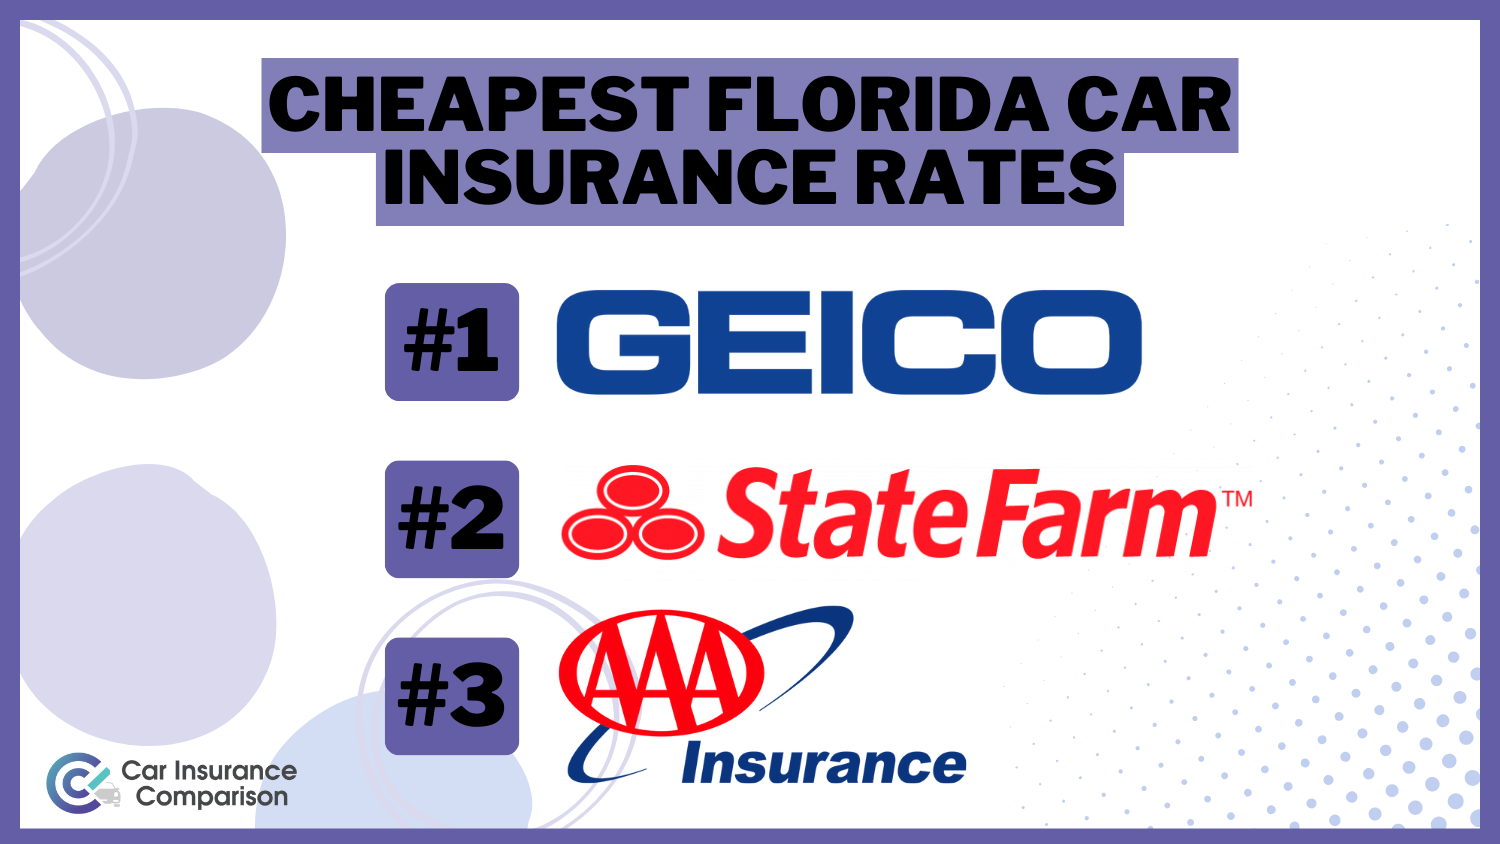 Cheapest Florida Car Insurance Rates: Geico, State Farm, AAA